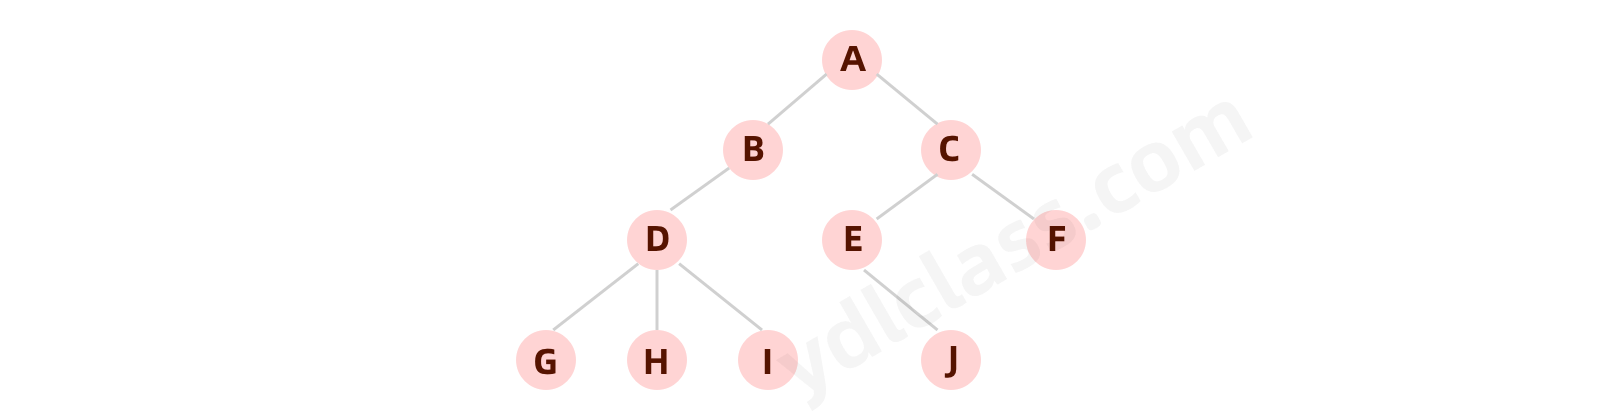 图2.1 普通树